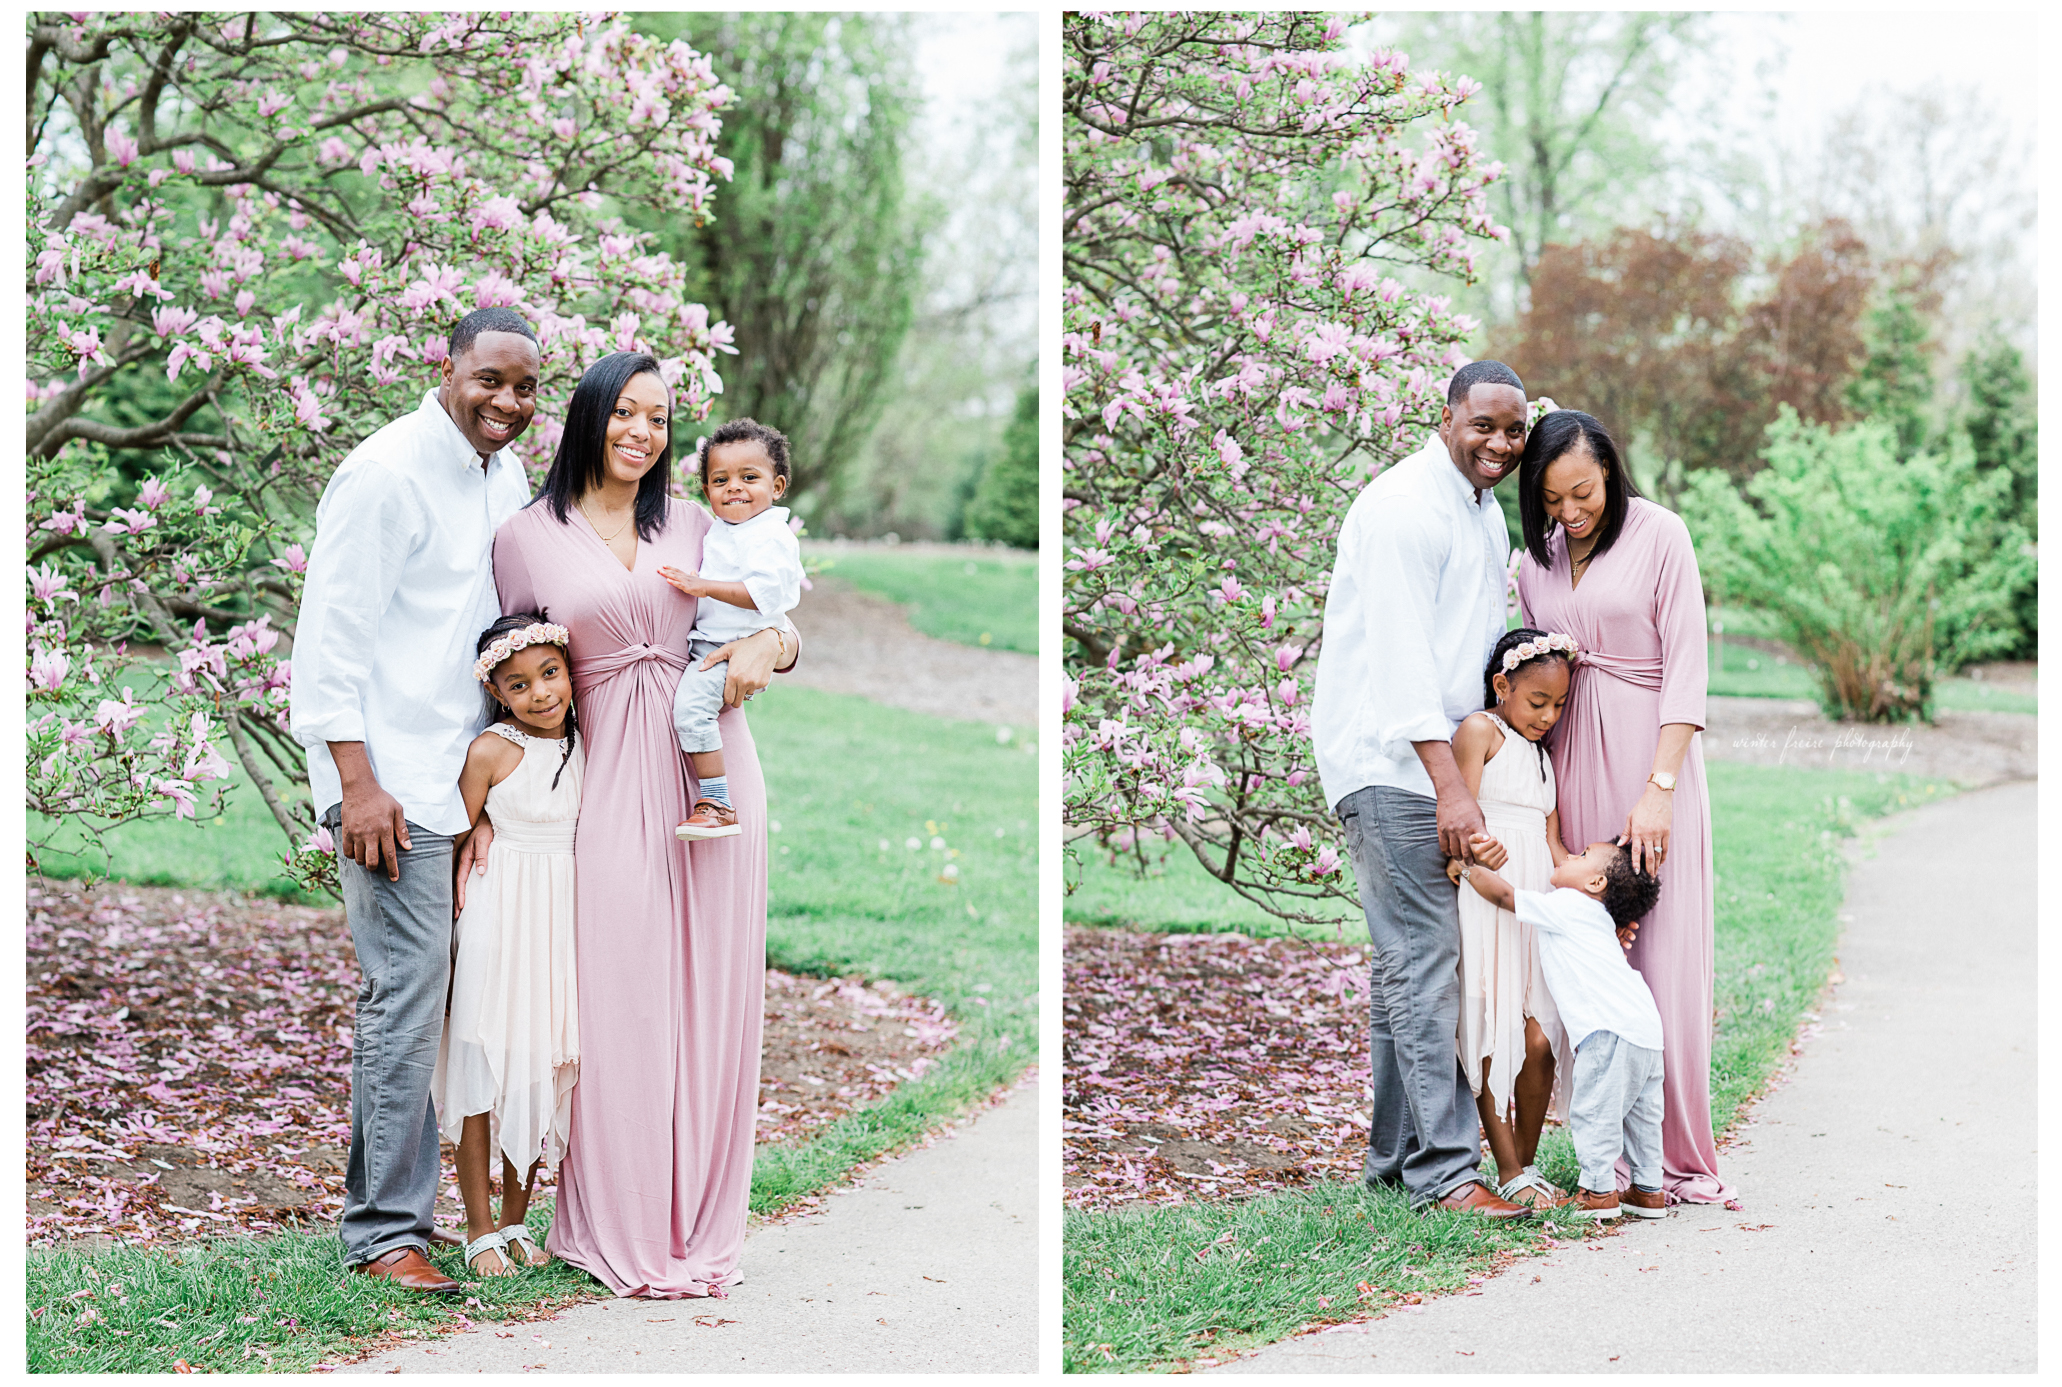 Winter Freire Photography | Elegant Timeless Organic Portraits | Dayton, Ohio Family Photography | Family | Fine Art Photographer Dayton, Ohio | Organic Family Session